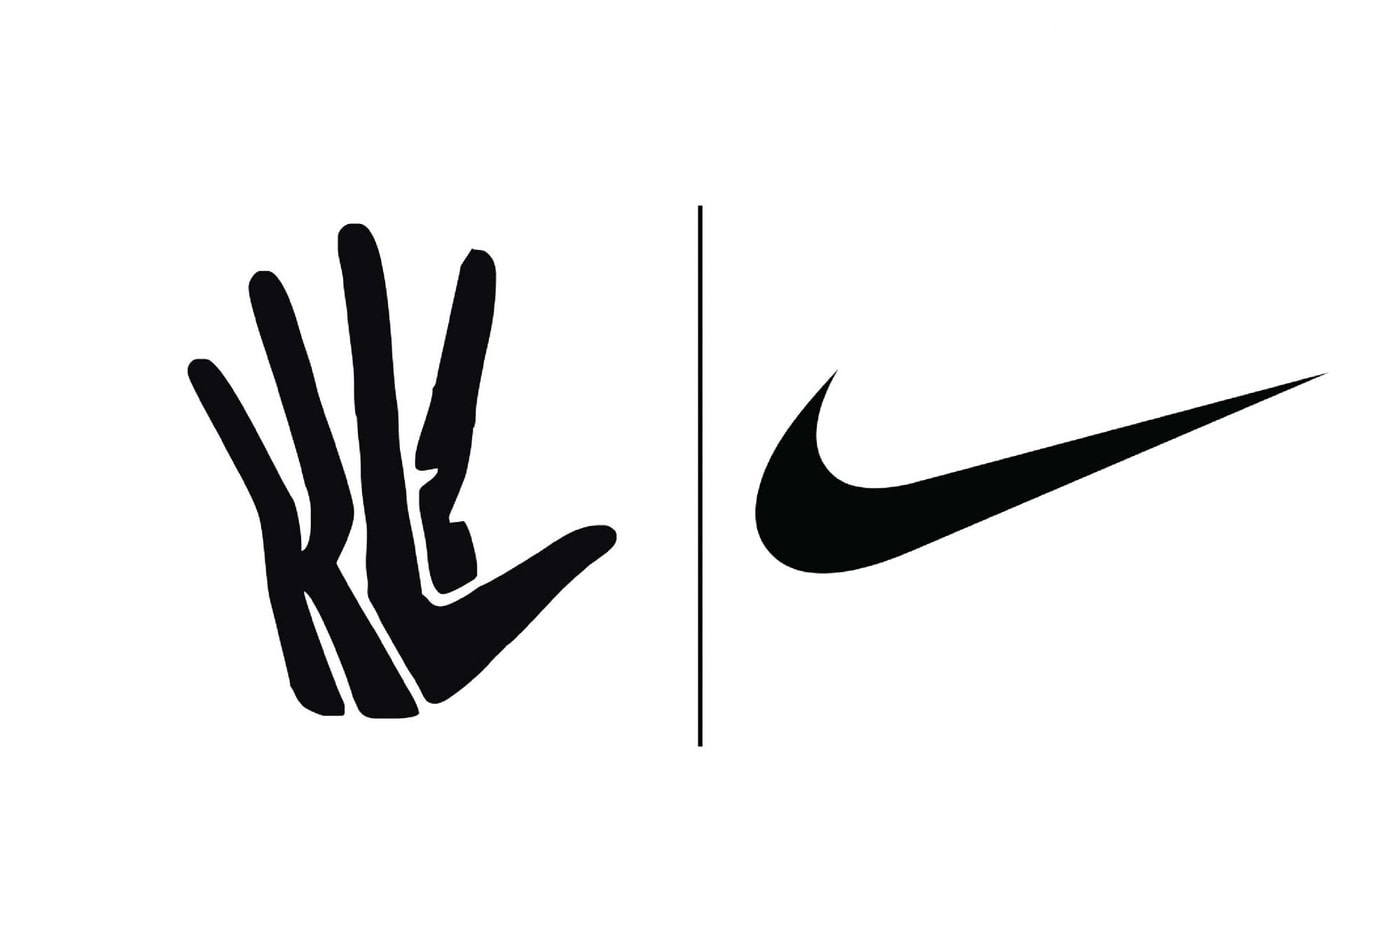 美國聯邦法院裁定 Nike 贏得 Kawhi Leonard「Klaw」商標訴訟